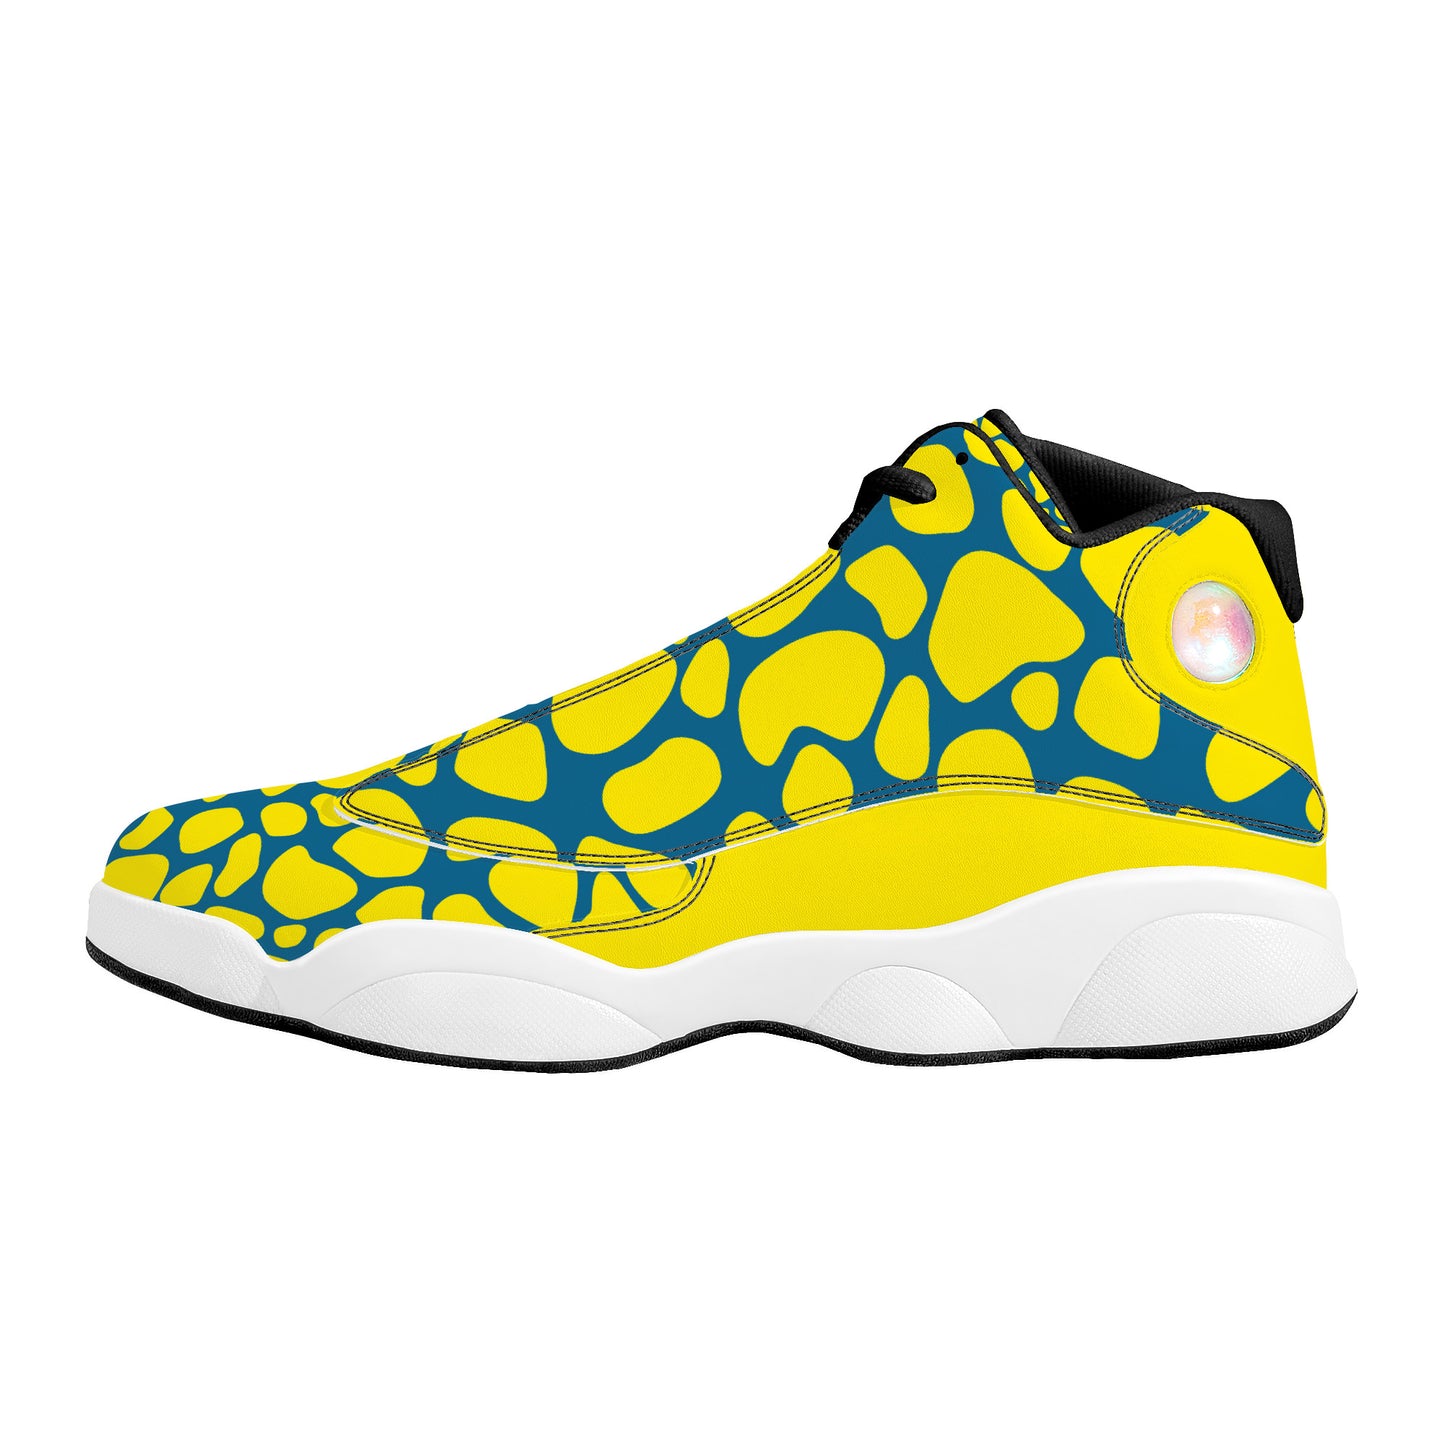 "Giraffe" Basketball Shoes